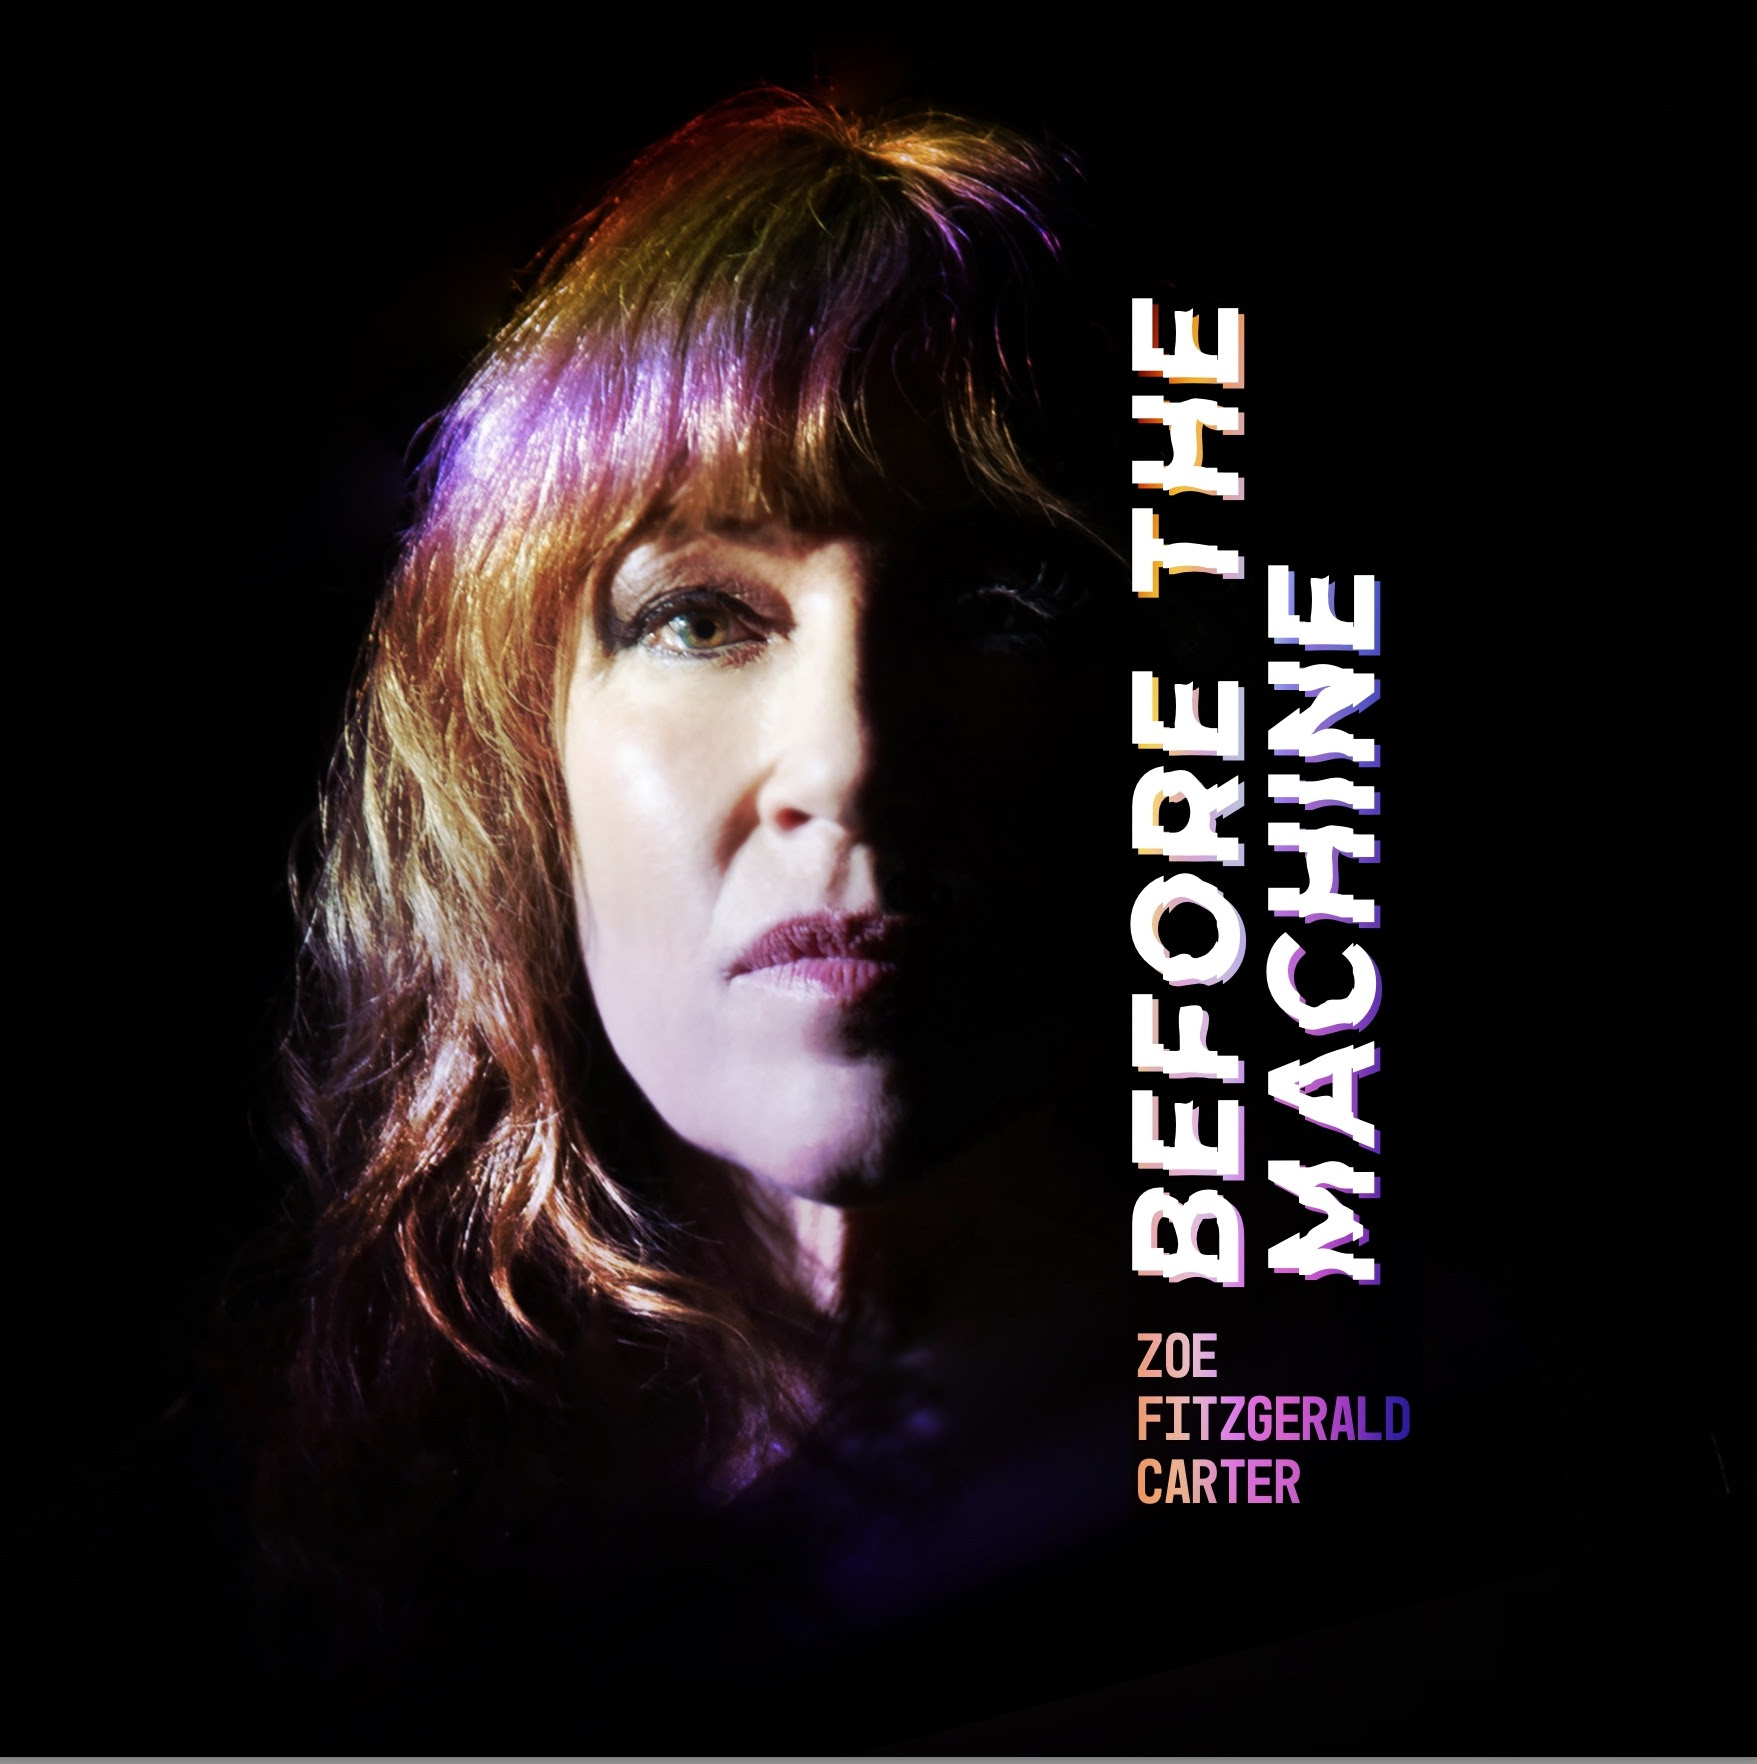 Zoe FitzGerald Carter's "Before the Machine" Due June 7th